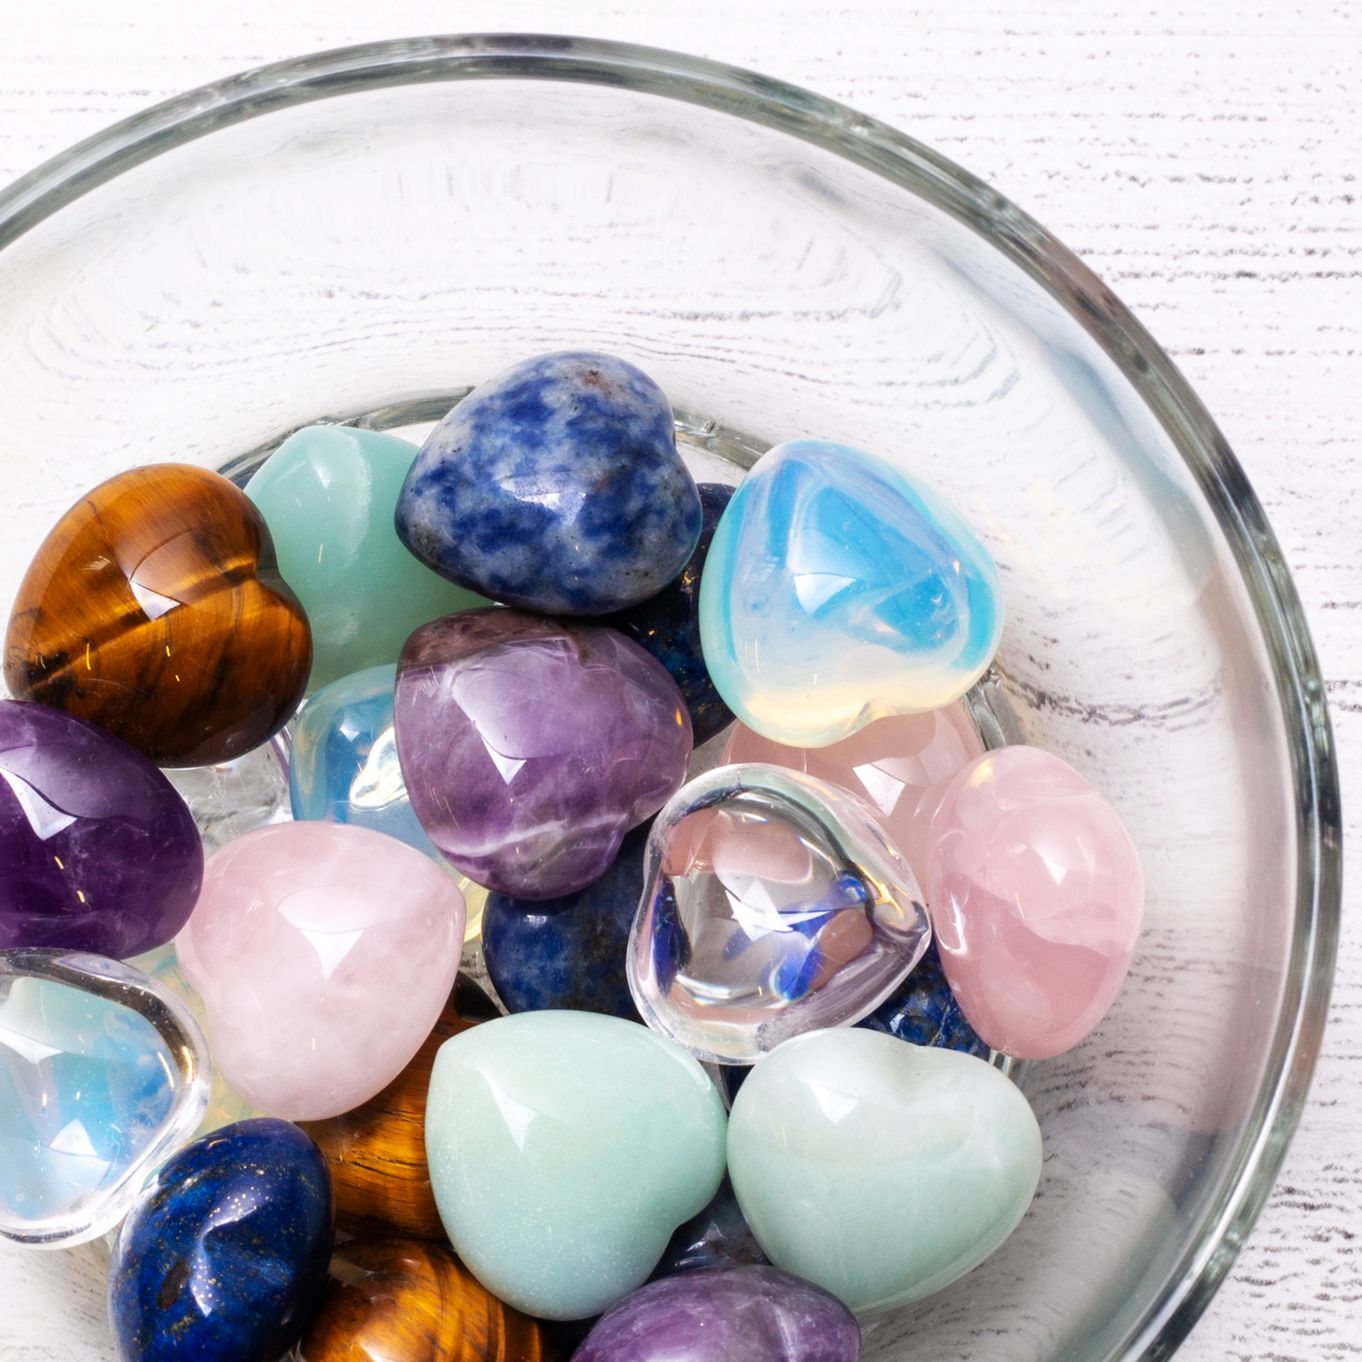 Semiprecious Hearts Collection - Genuine Gem Stones